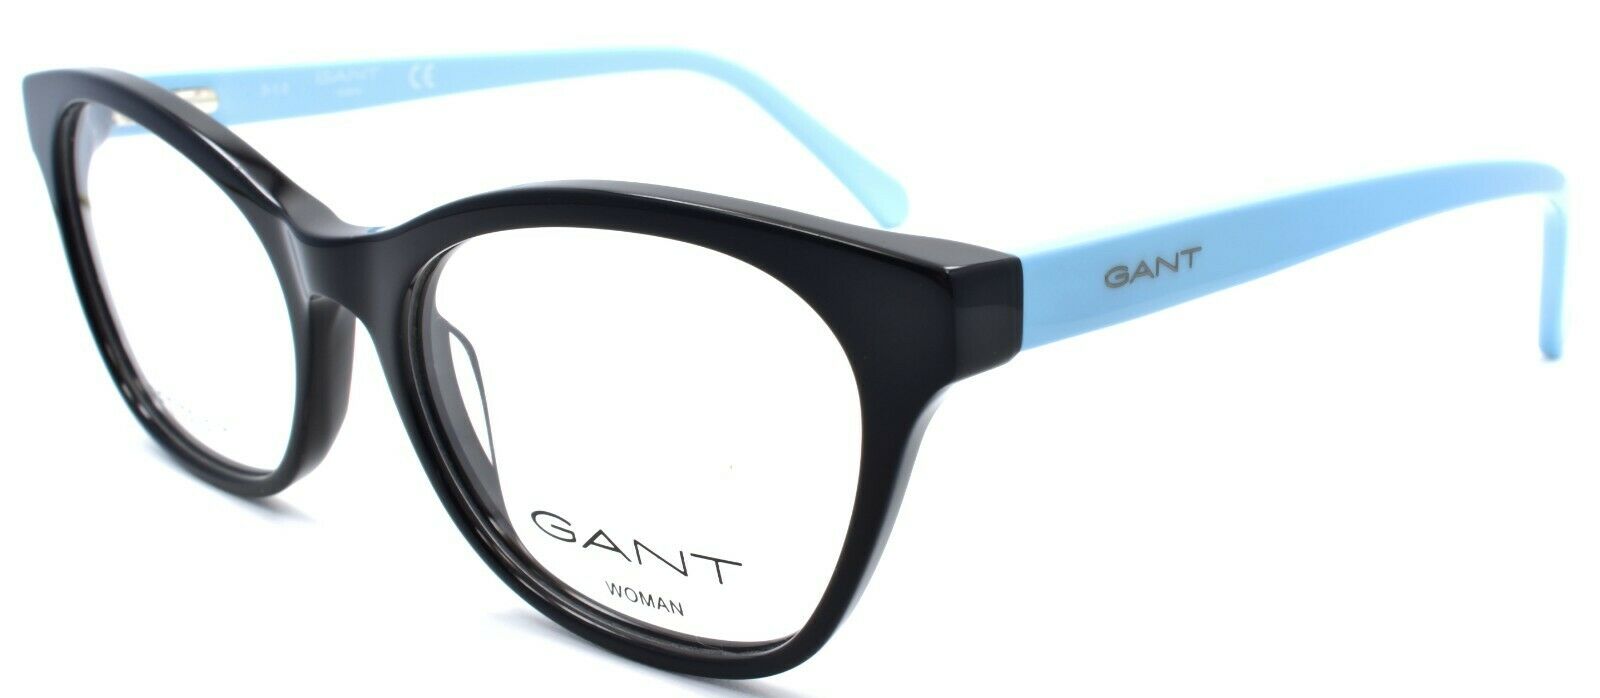 1-GANT GA4099 001 Women's Eyeglasses Frames Petite 50-16-140 Black-889214183705-IKSpecs